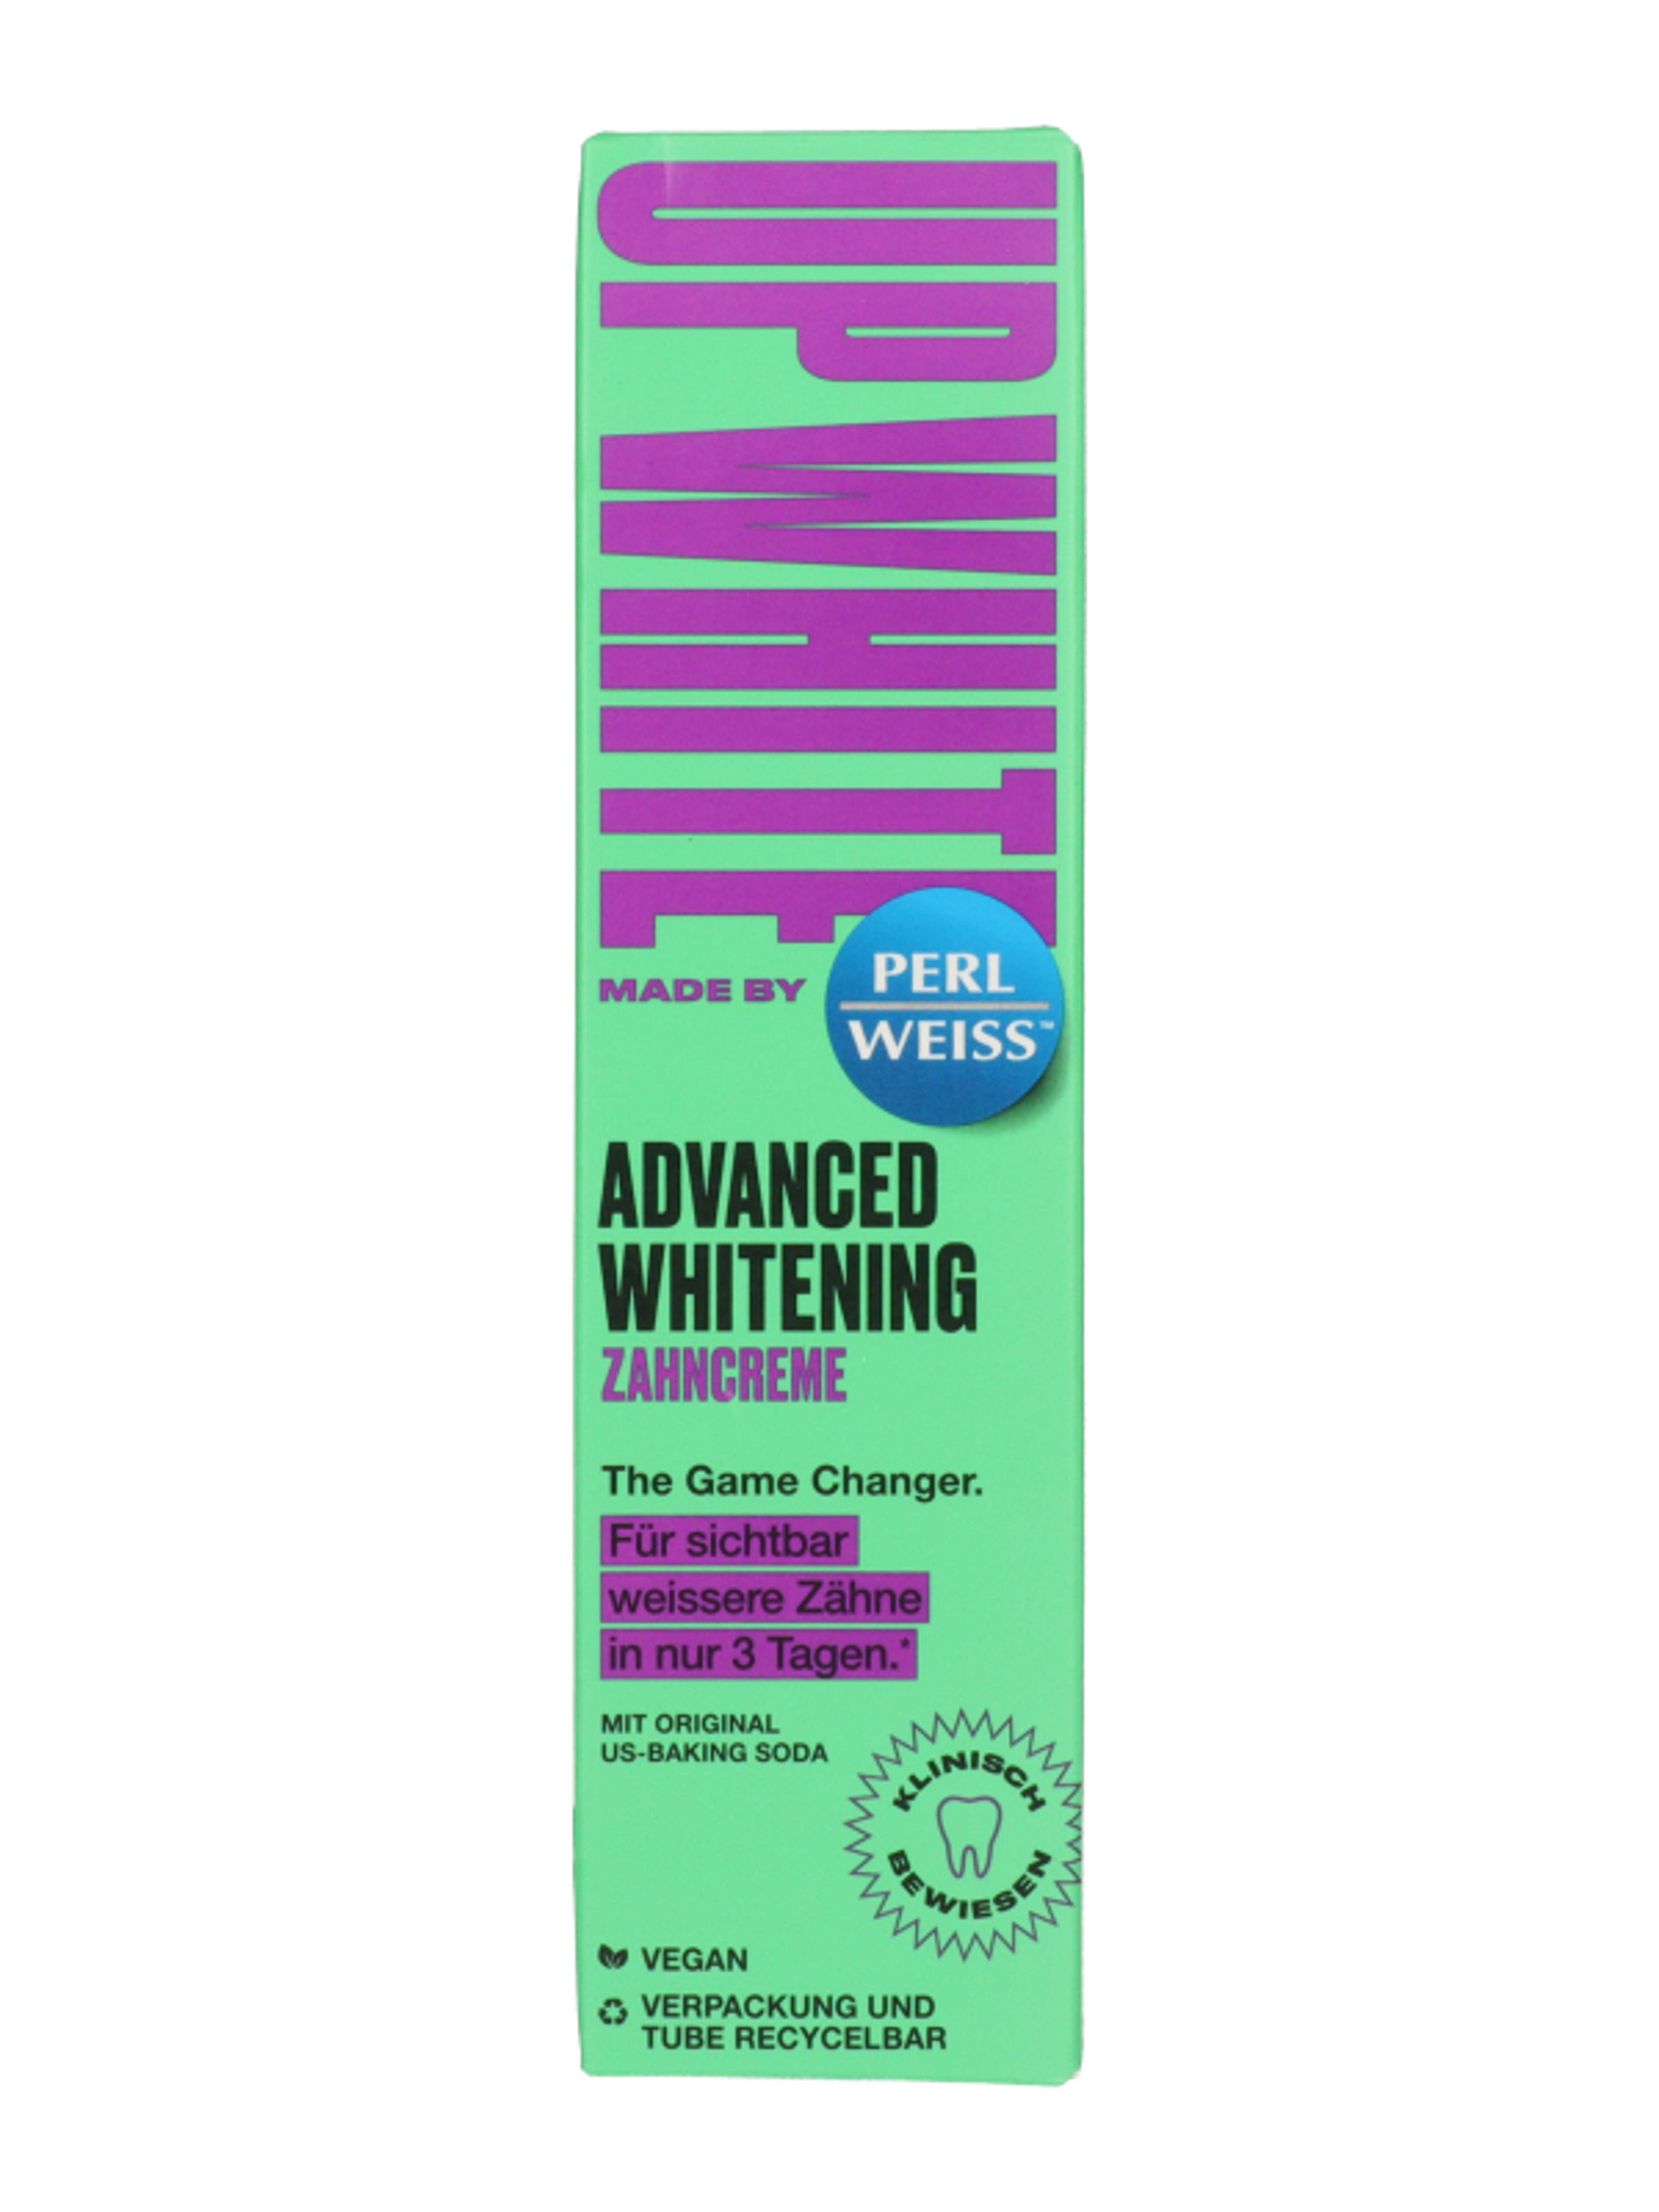 Perlweiss Advanced Whitening fogfehérítő - 75 ml